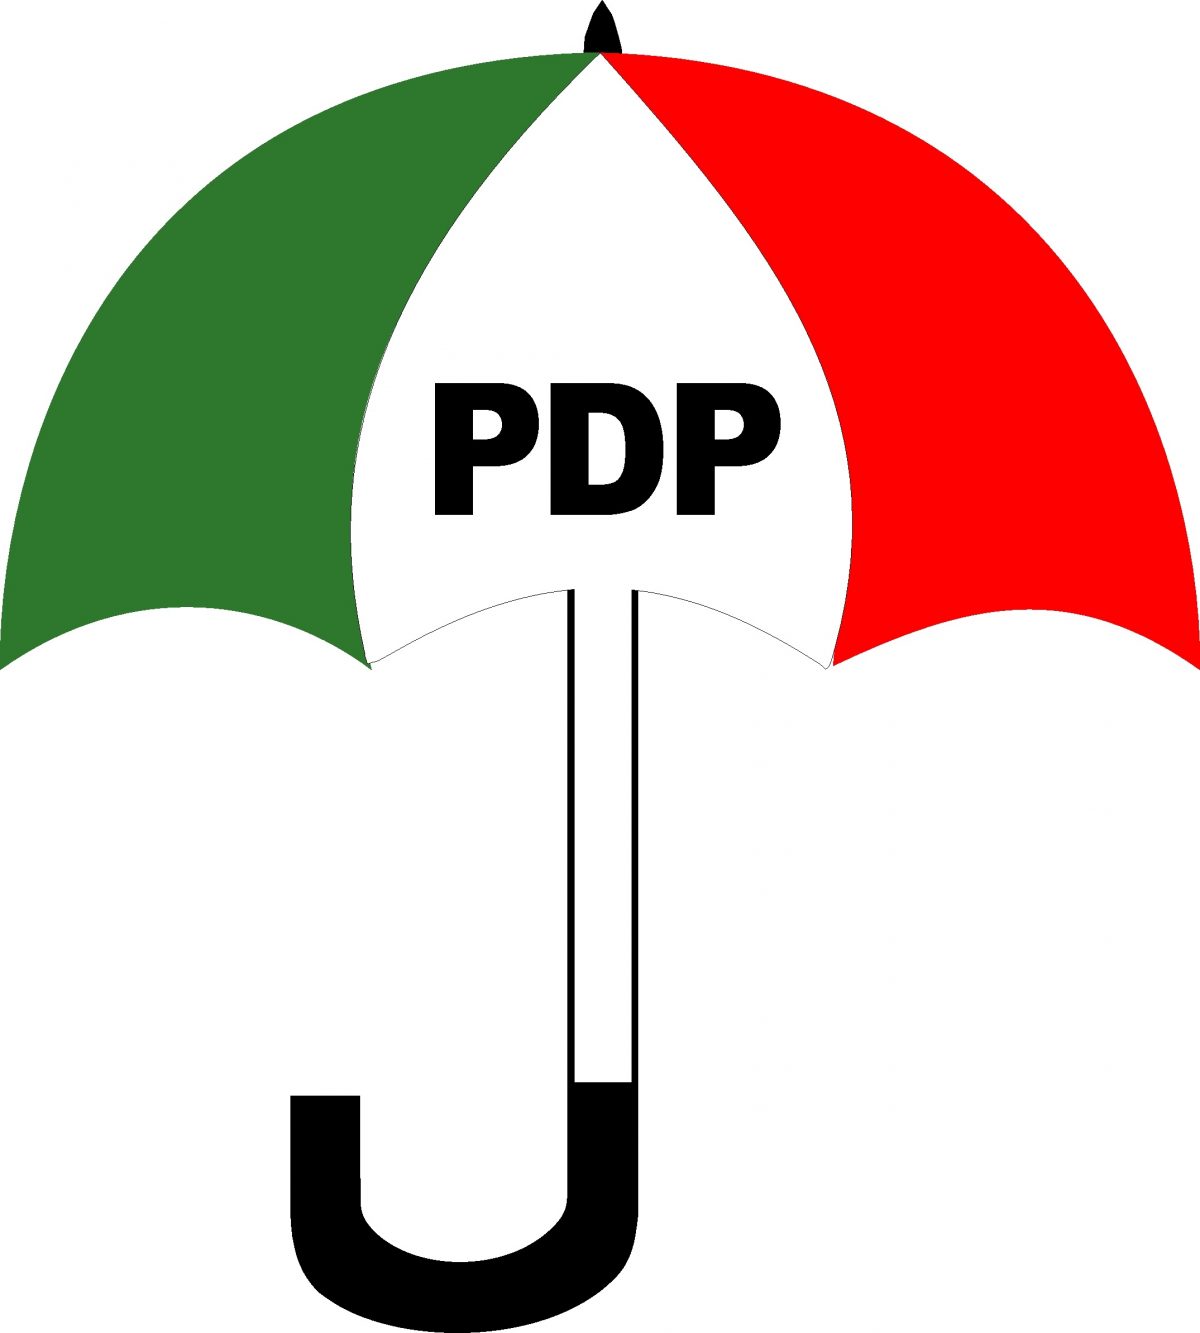 APC Knocks PDP For Discrediting Osun Supplementary Poll